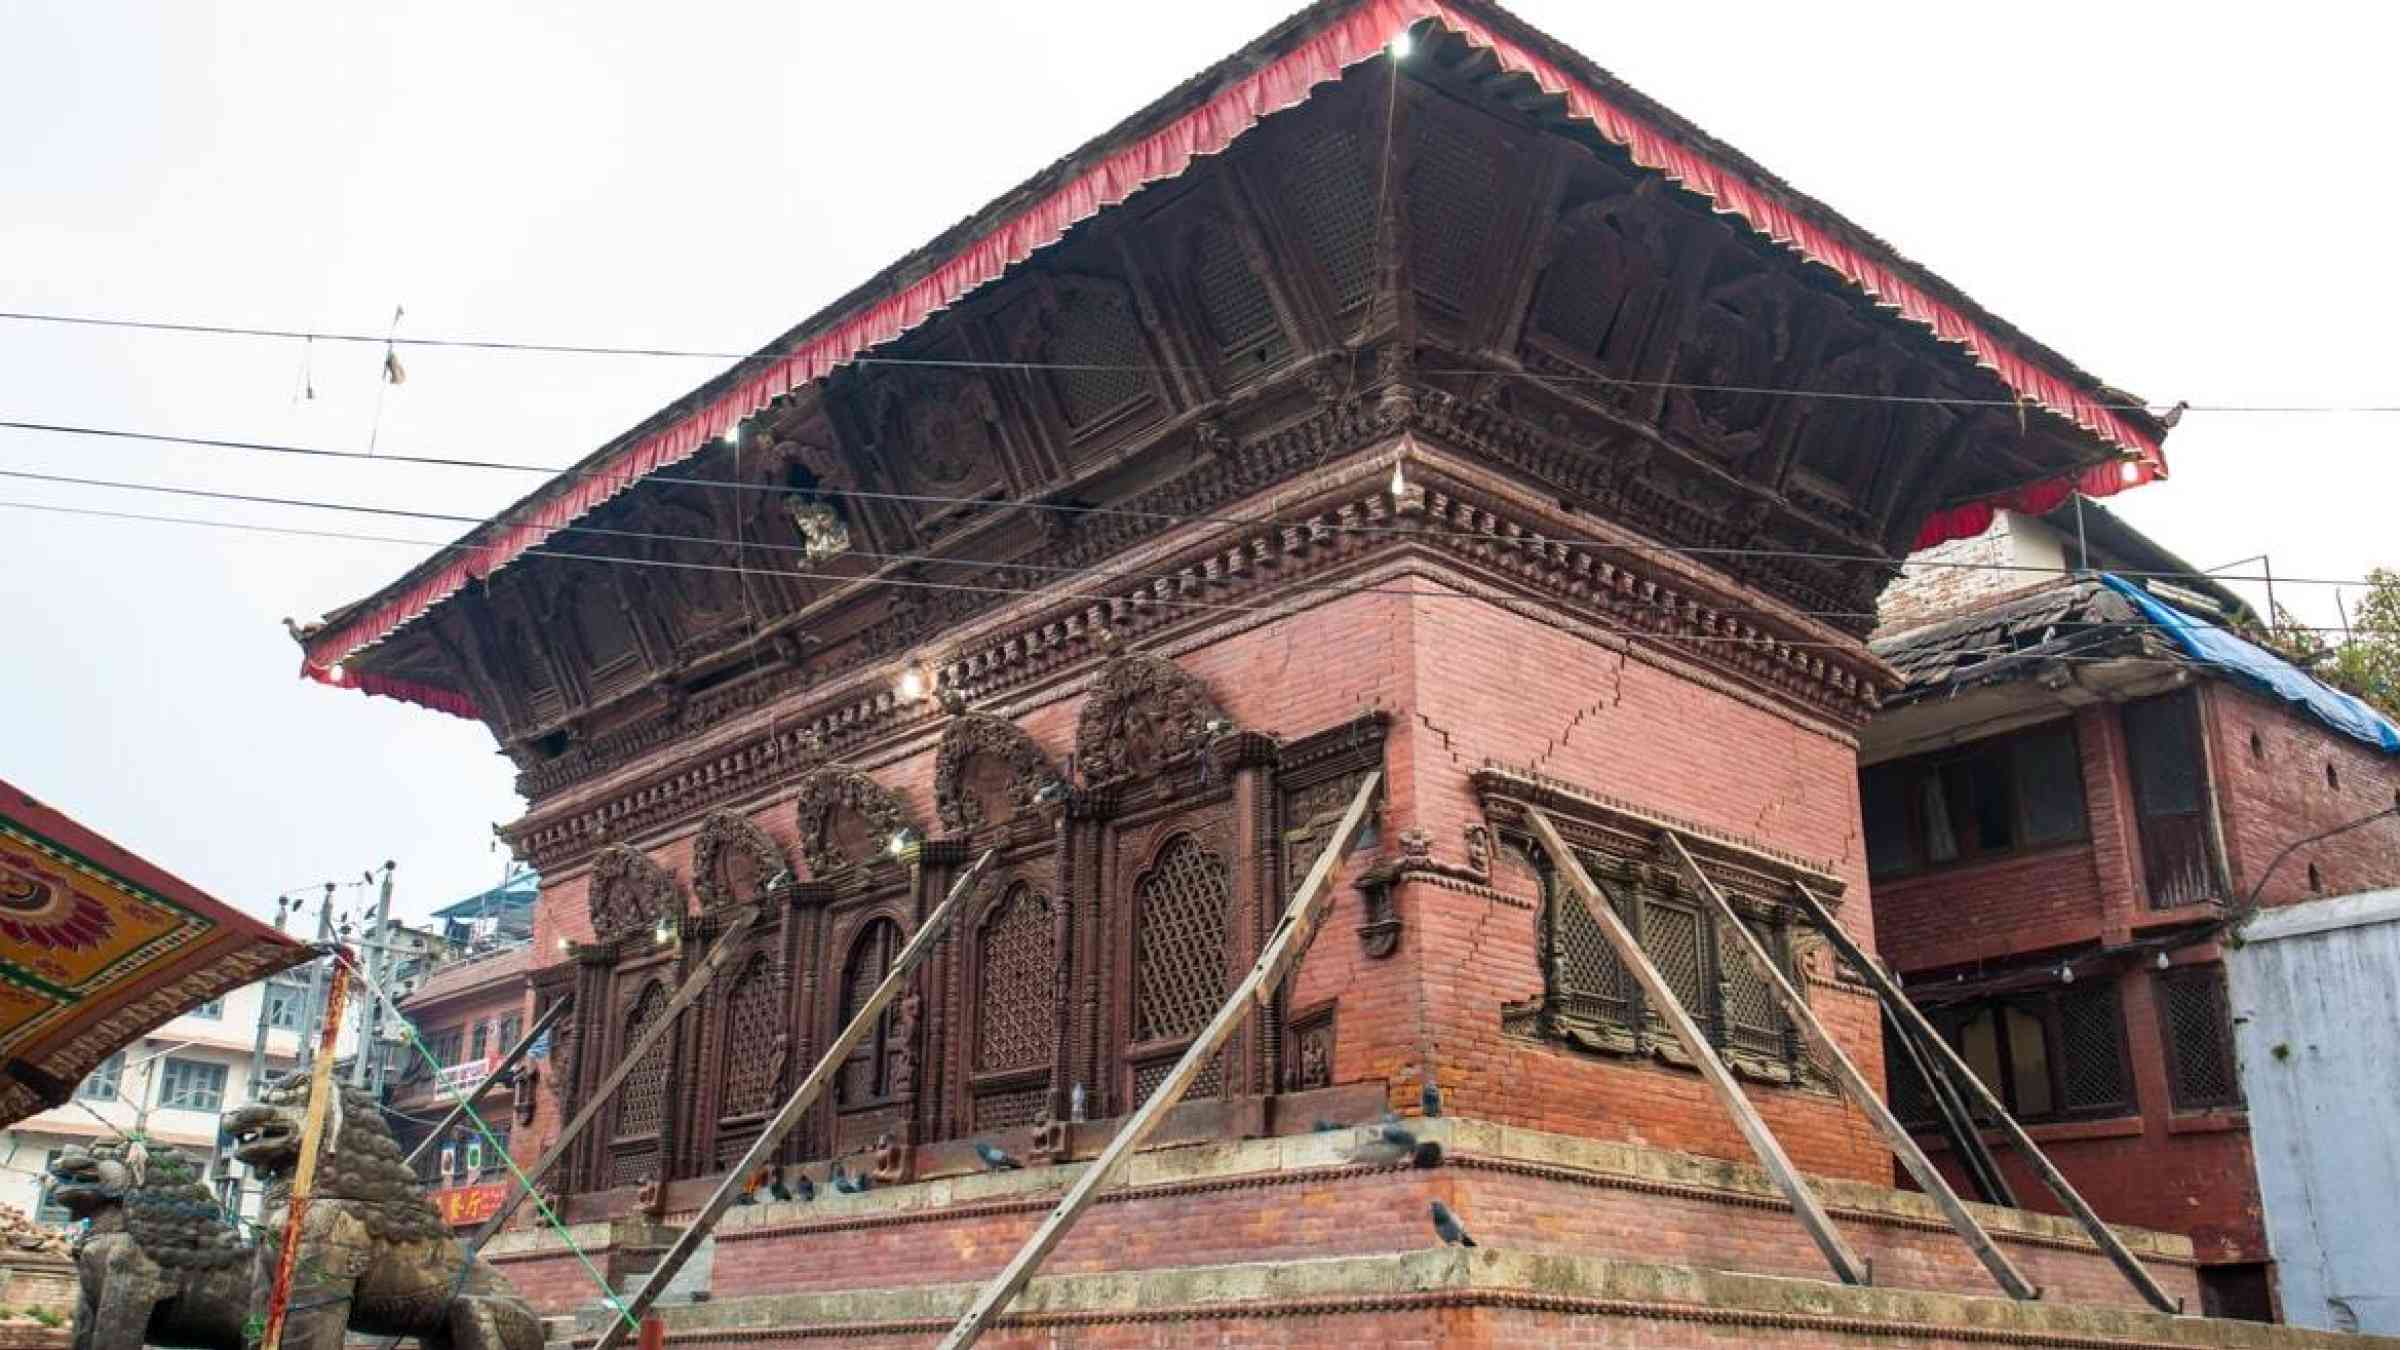 Temple in Kathmandu, needing support due to earthquake damage